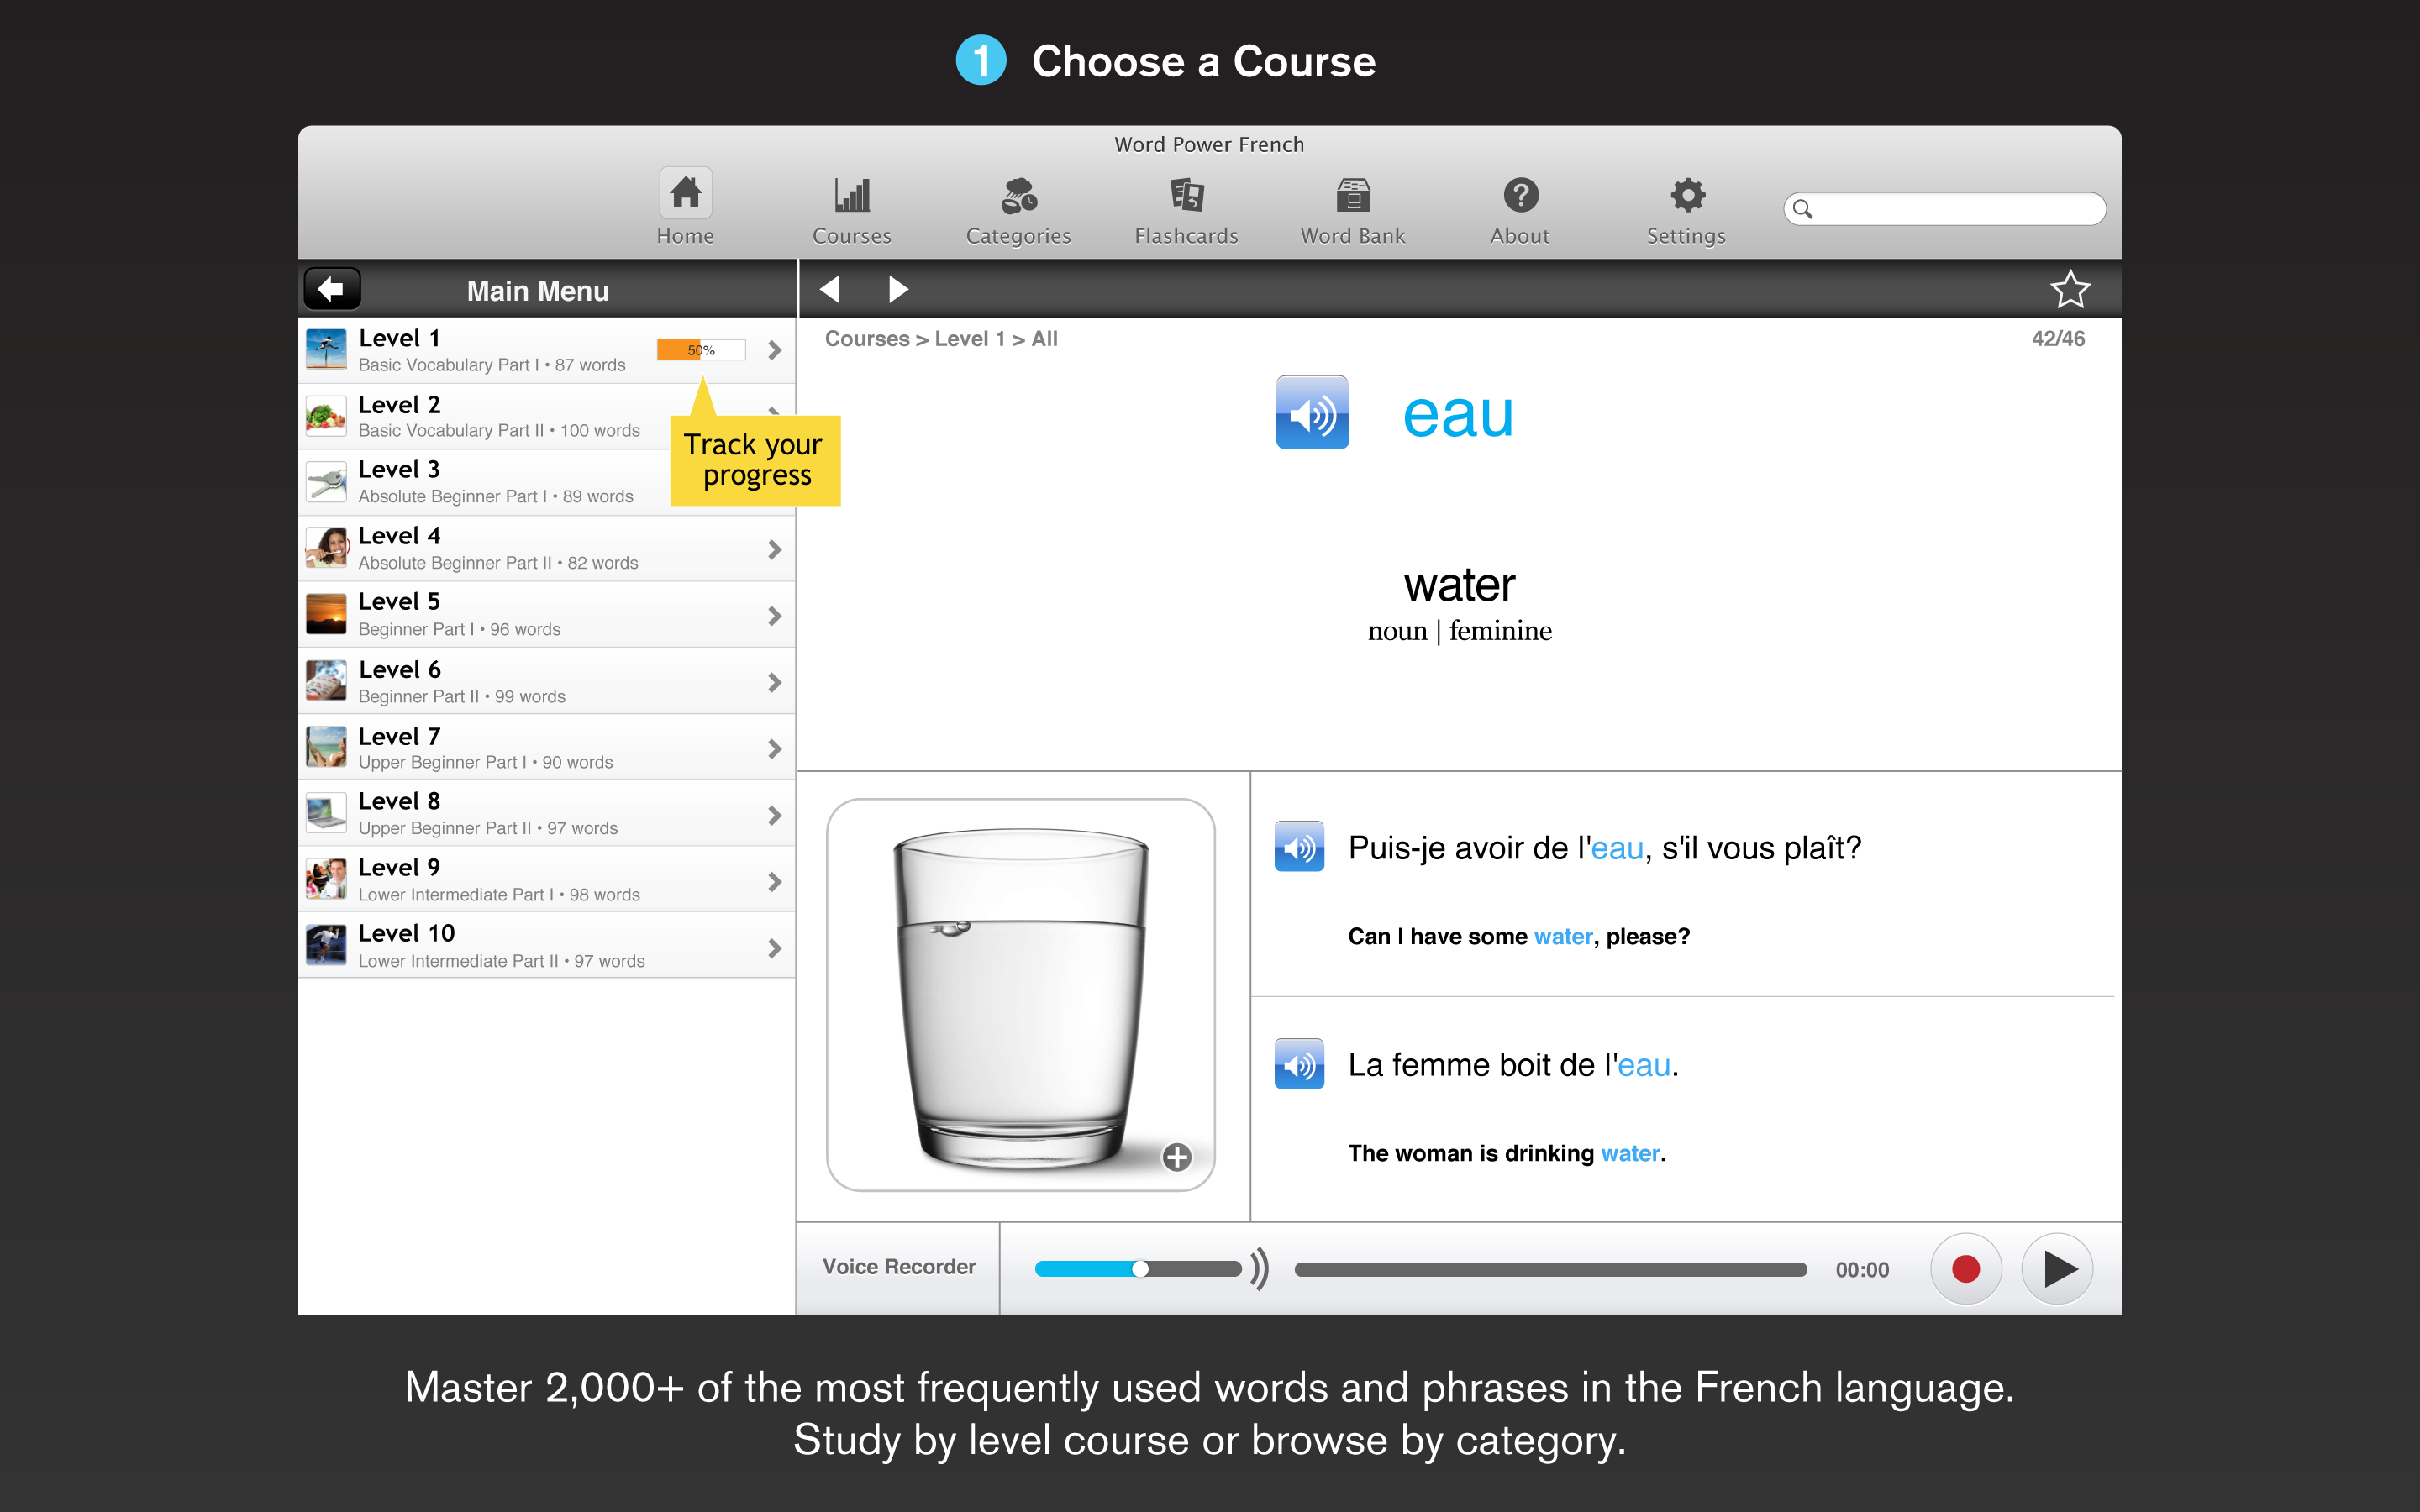 Screenshot 1 - Learn French - Gengo WordPower 